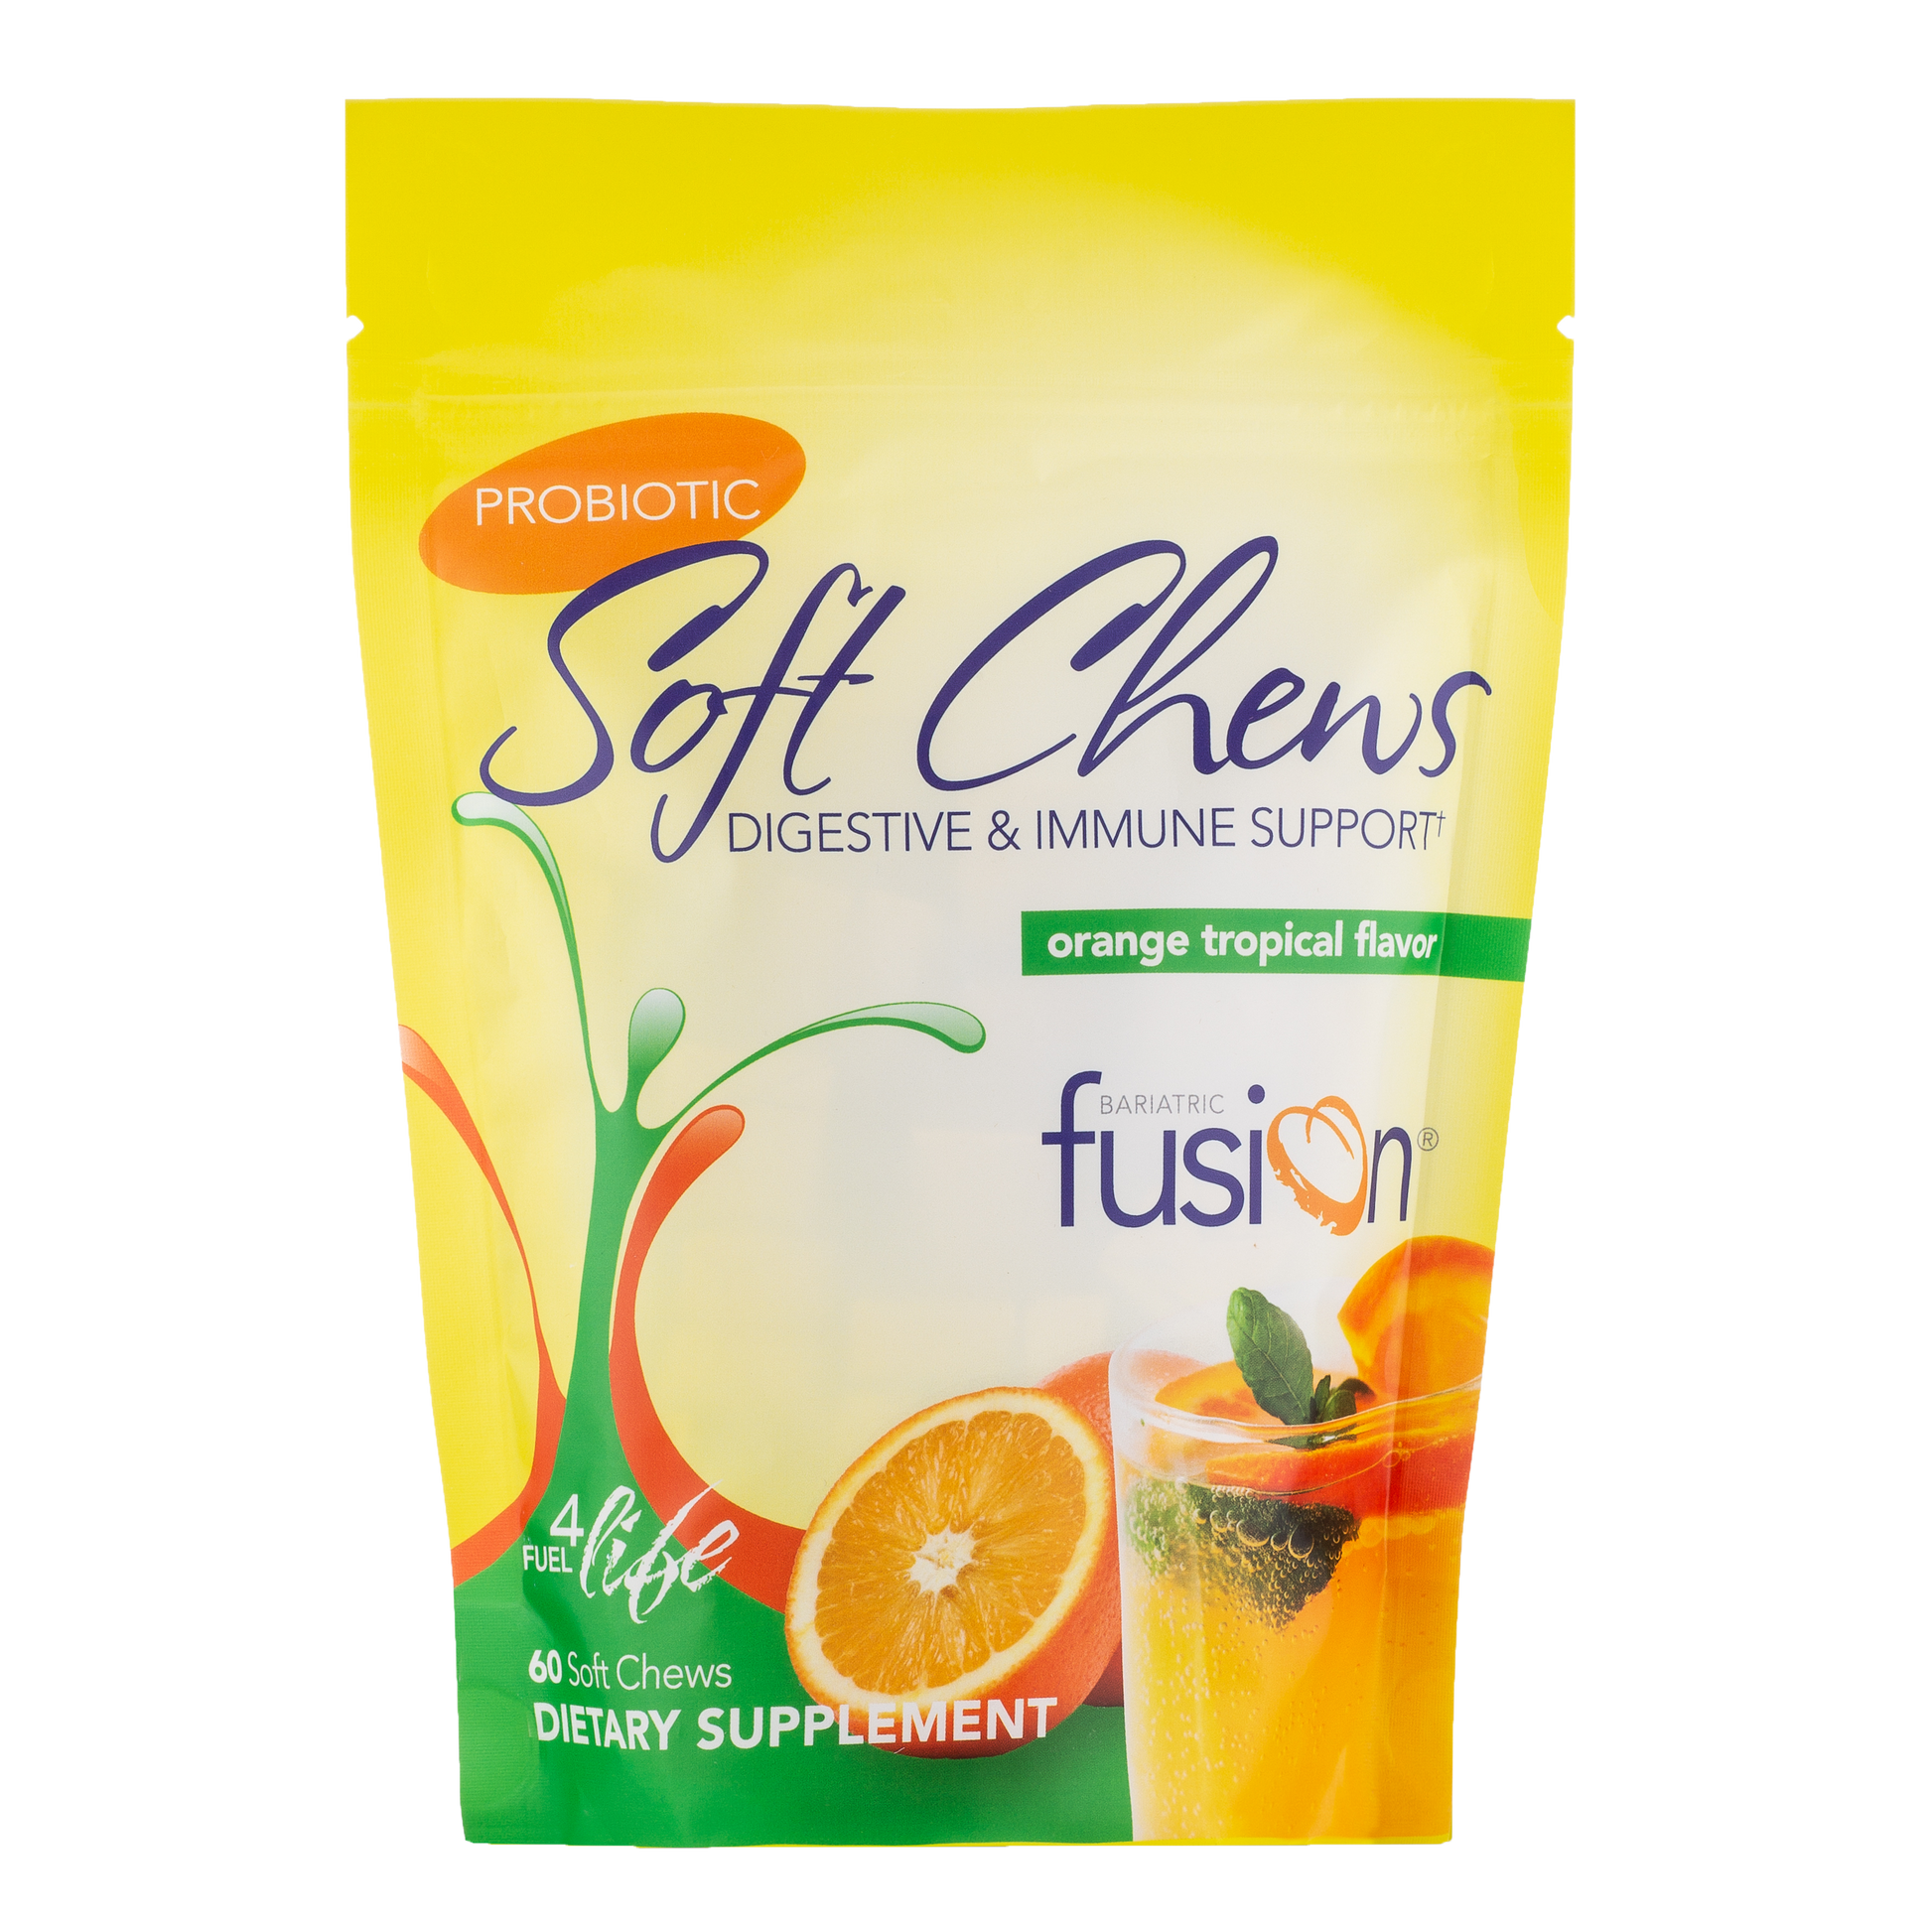 Orange Tropical Probiotic Soft Chew - Bariatric Fusion